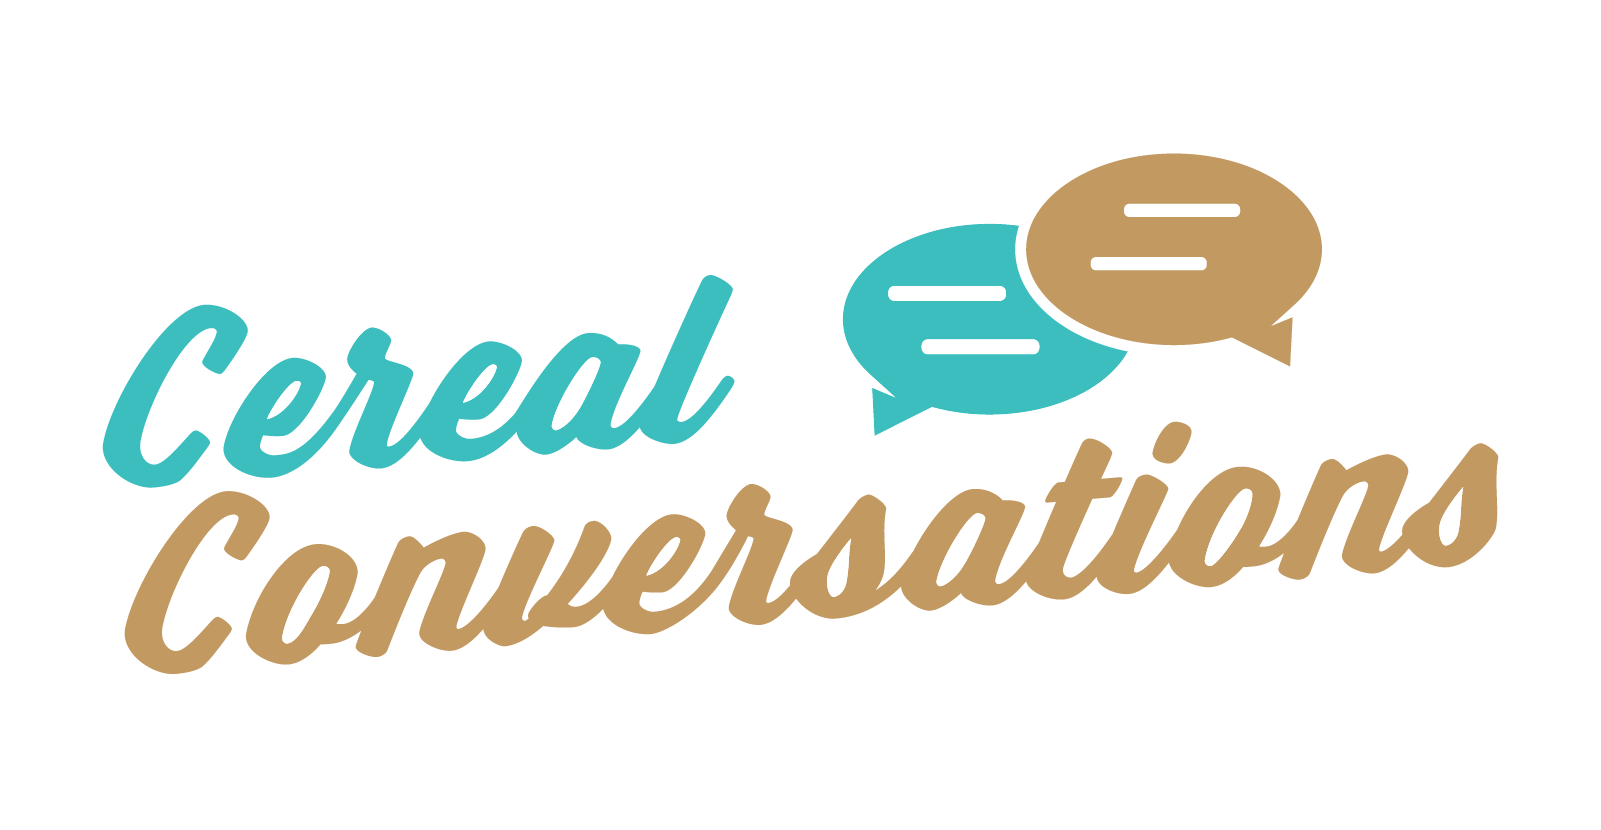 Cereal Conversations - Event Summary